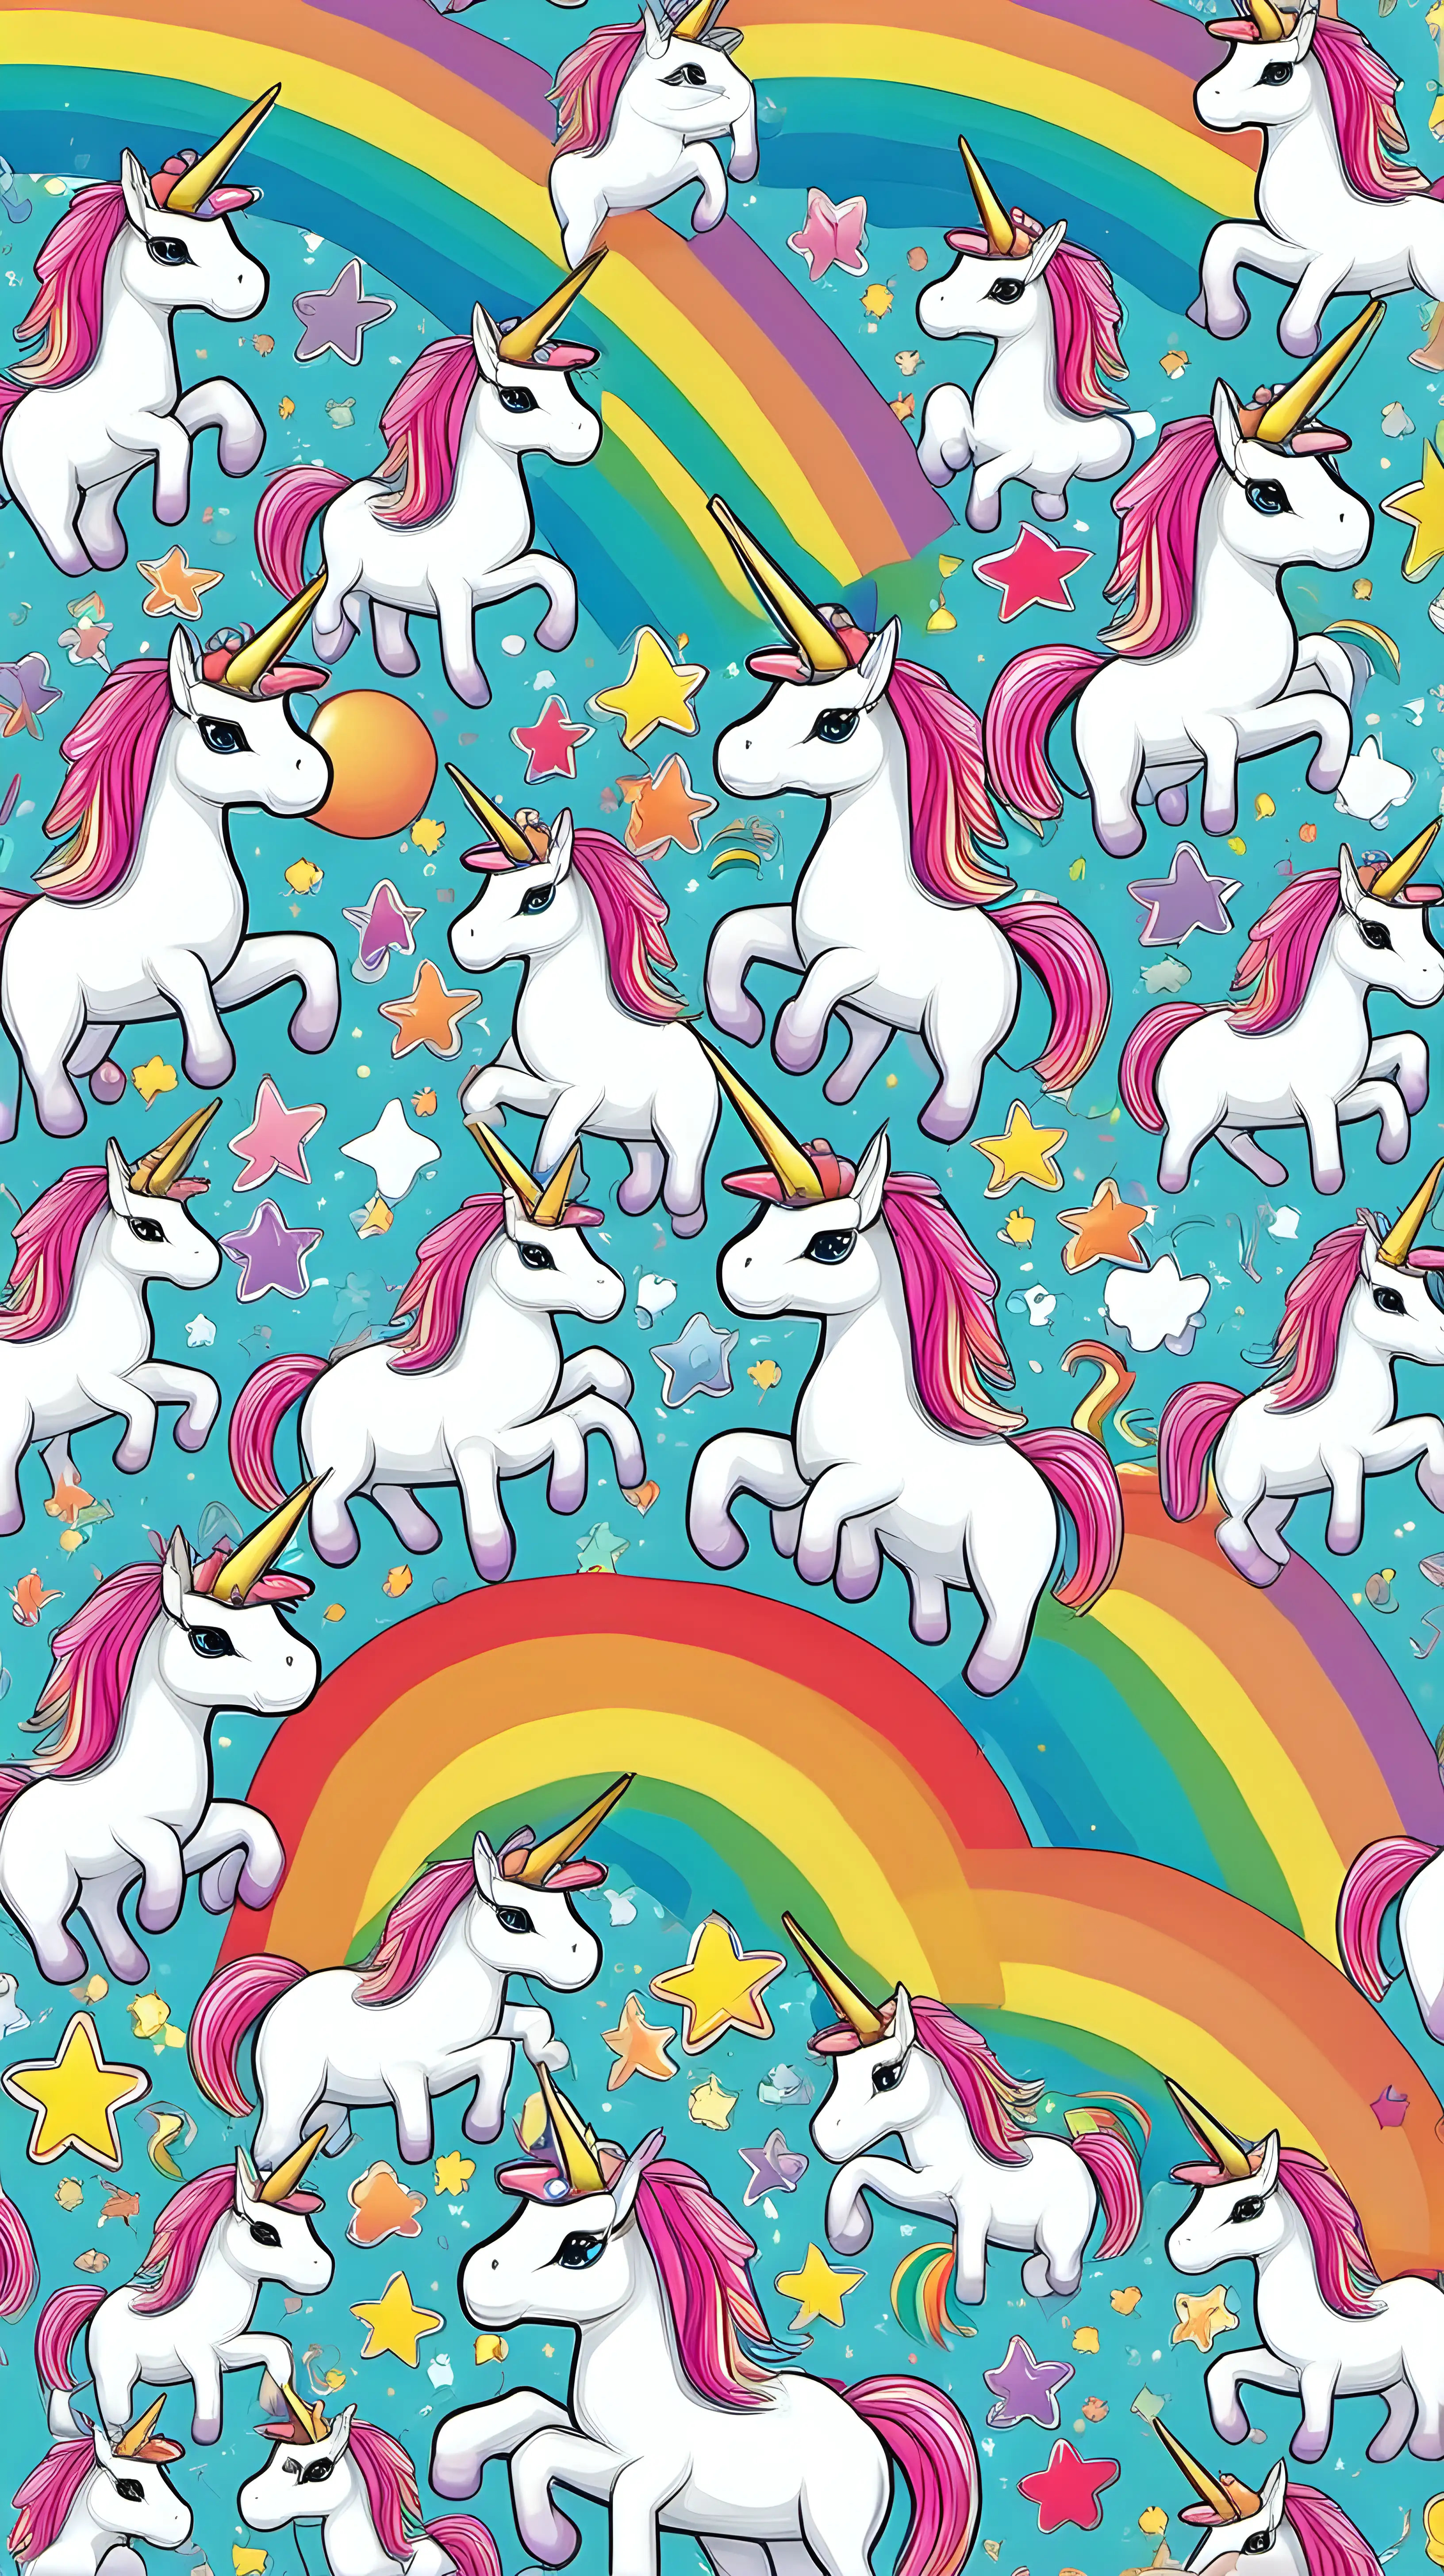 Cartoon Unicorns and Rainbows in Playful Harmony